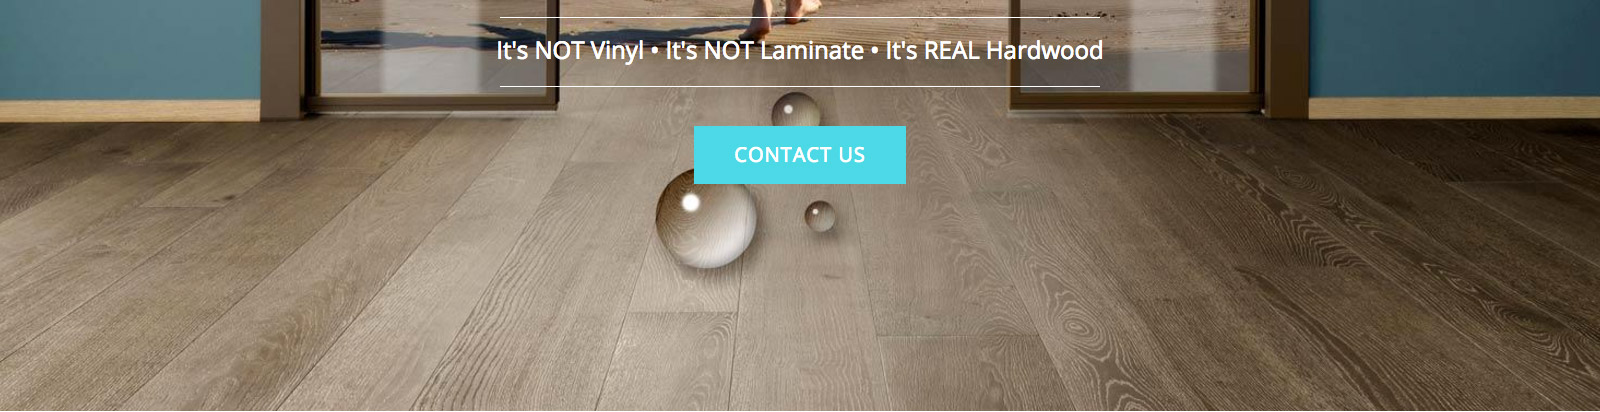 Flooring website branding creative design art marketing advertising